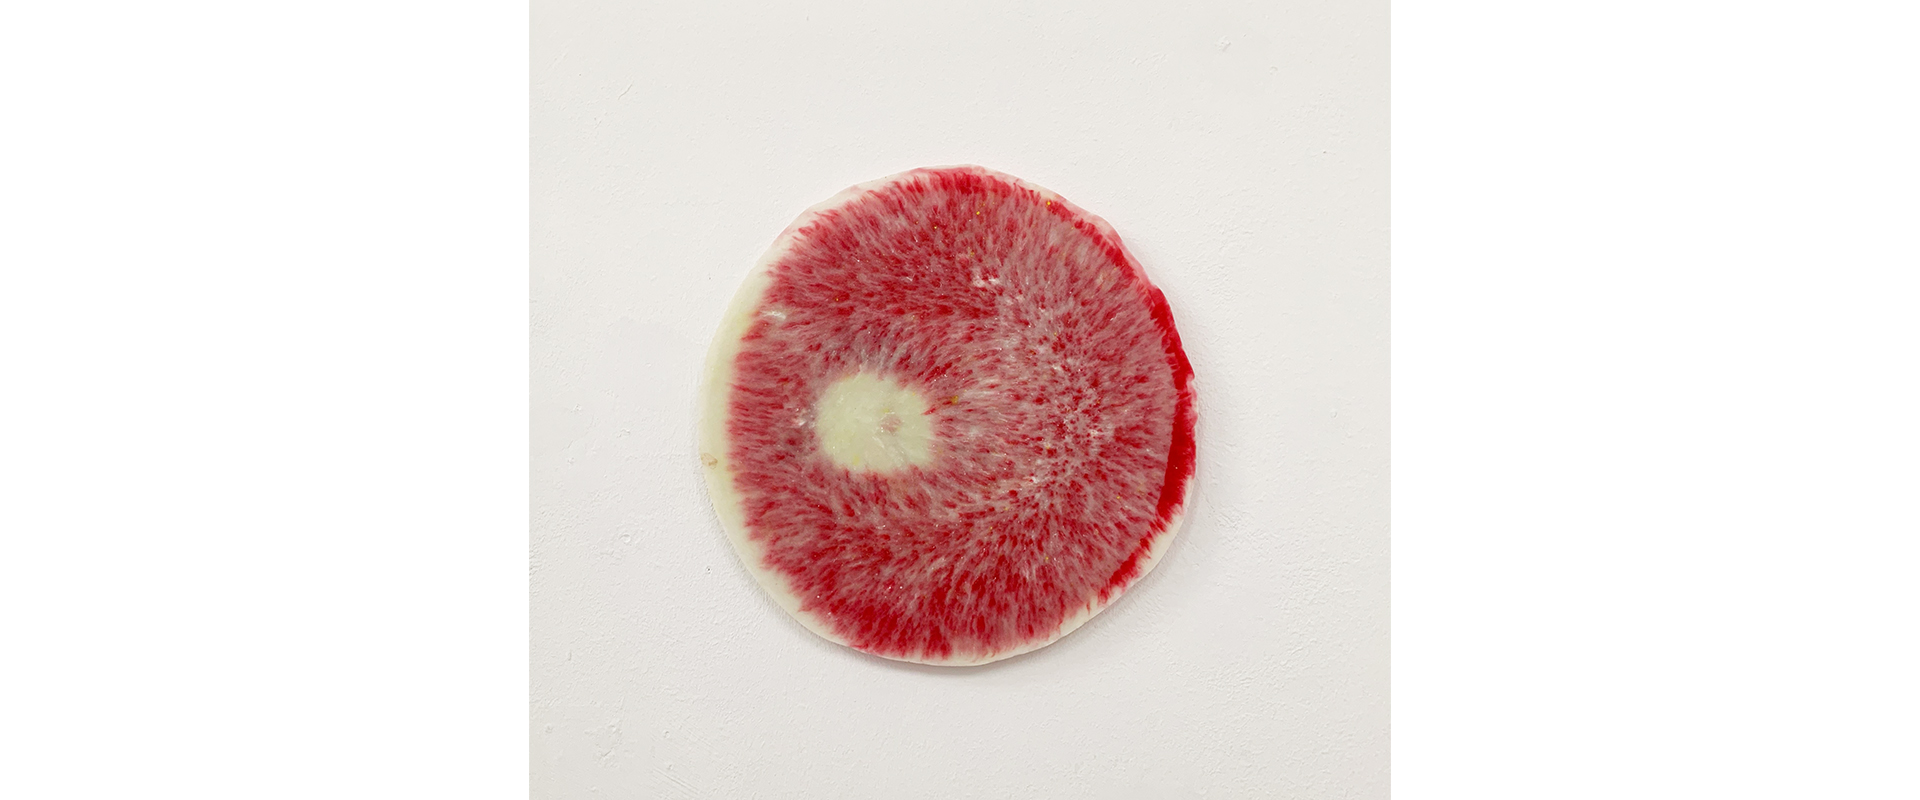 Harald Pompl, Dot (rot) - 2013, Harz, Pigmente, D. 28 cm